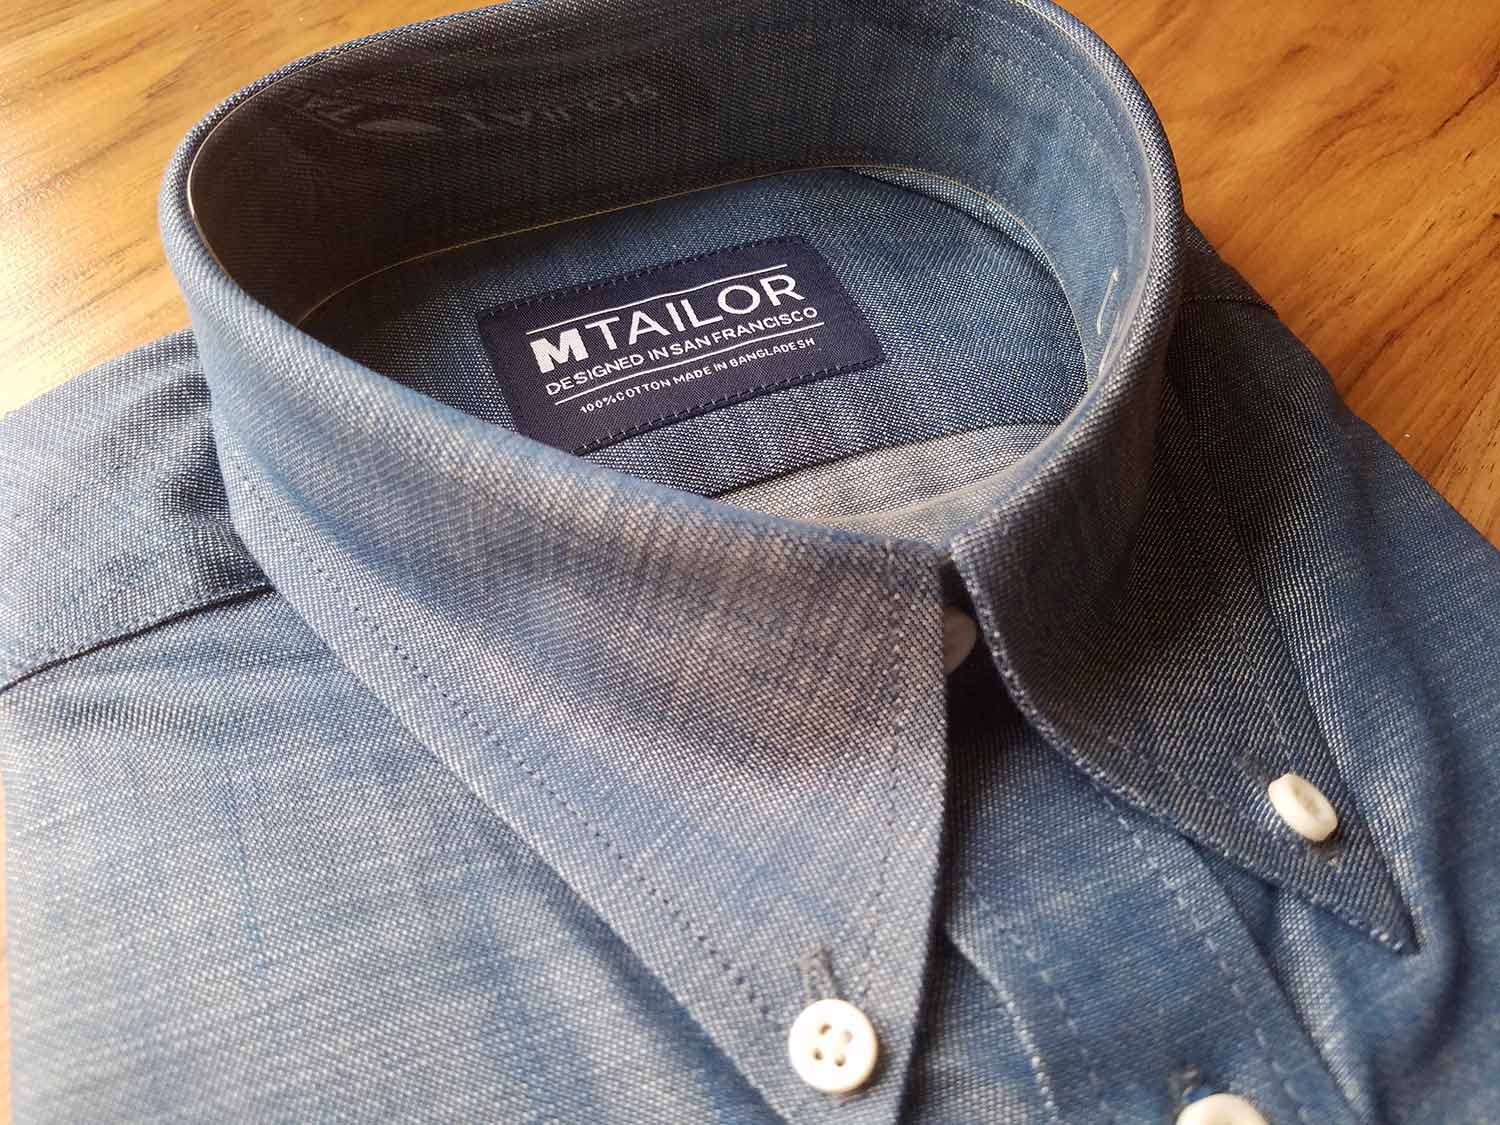 MTailor Custom Shirt Details | GENTLEMAN WITHIN